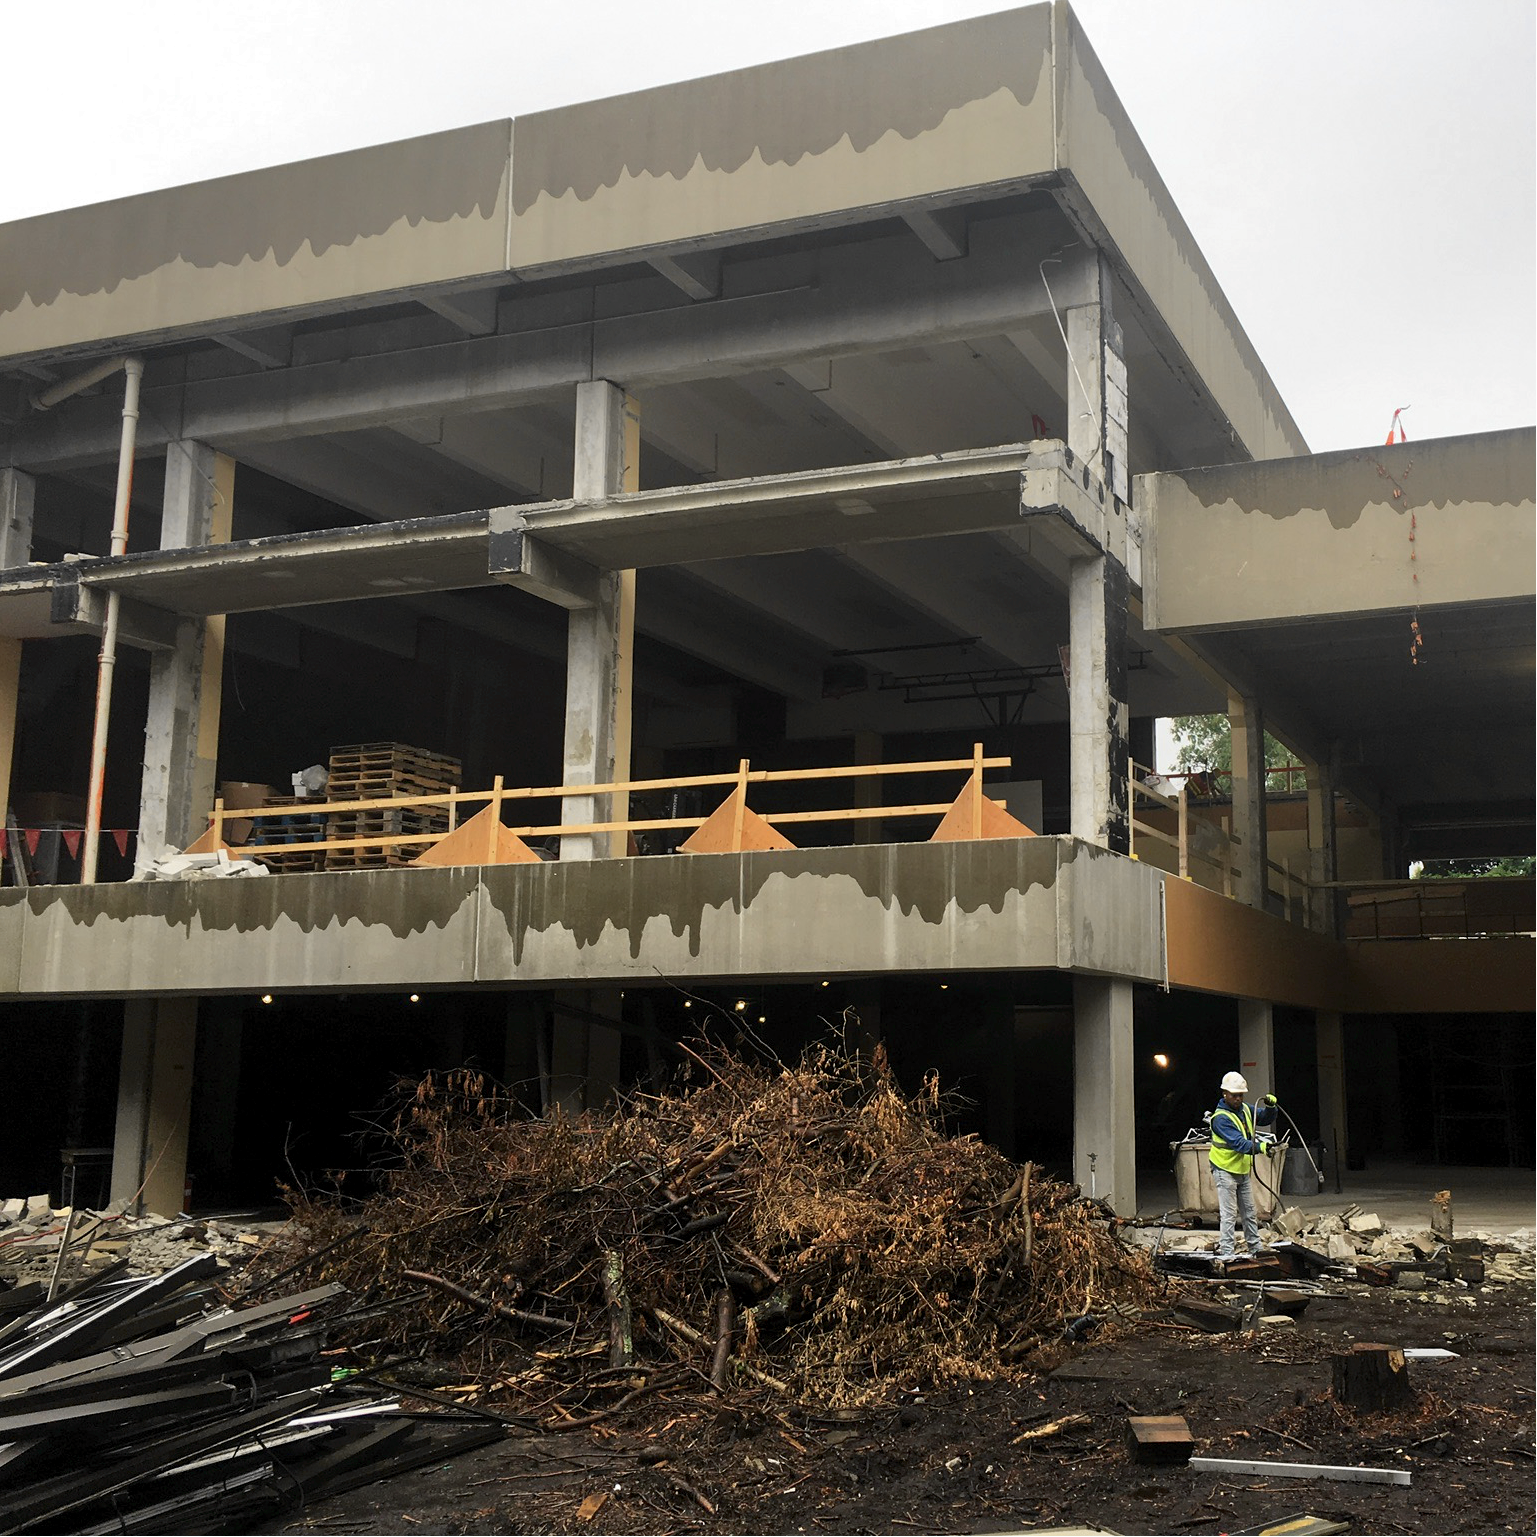 In-progress demolition/construction photo of the future Powderhouse Studios campus